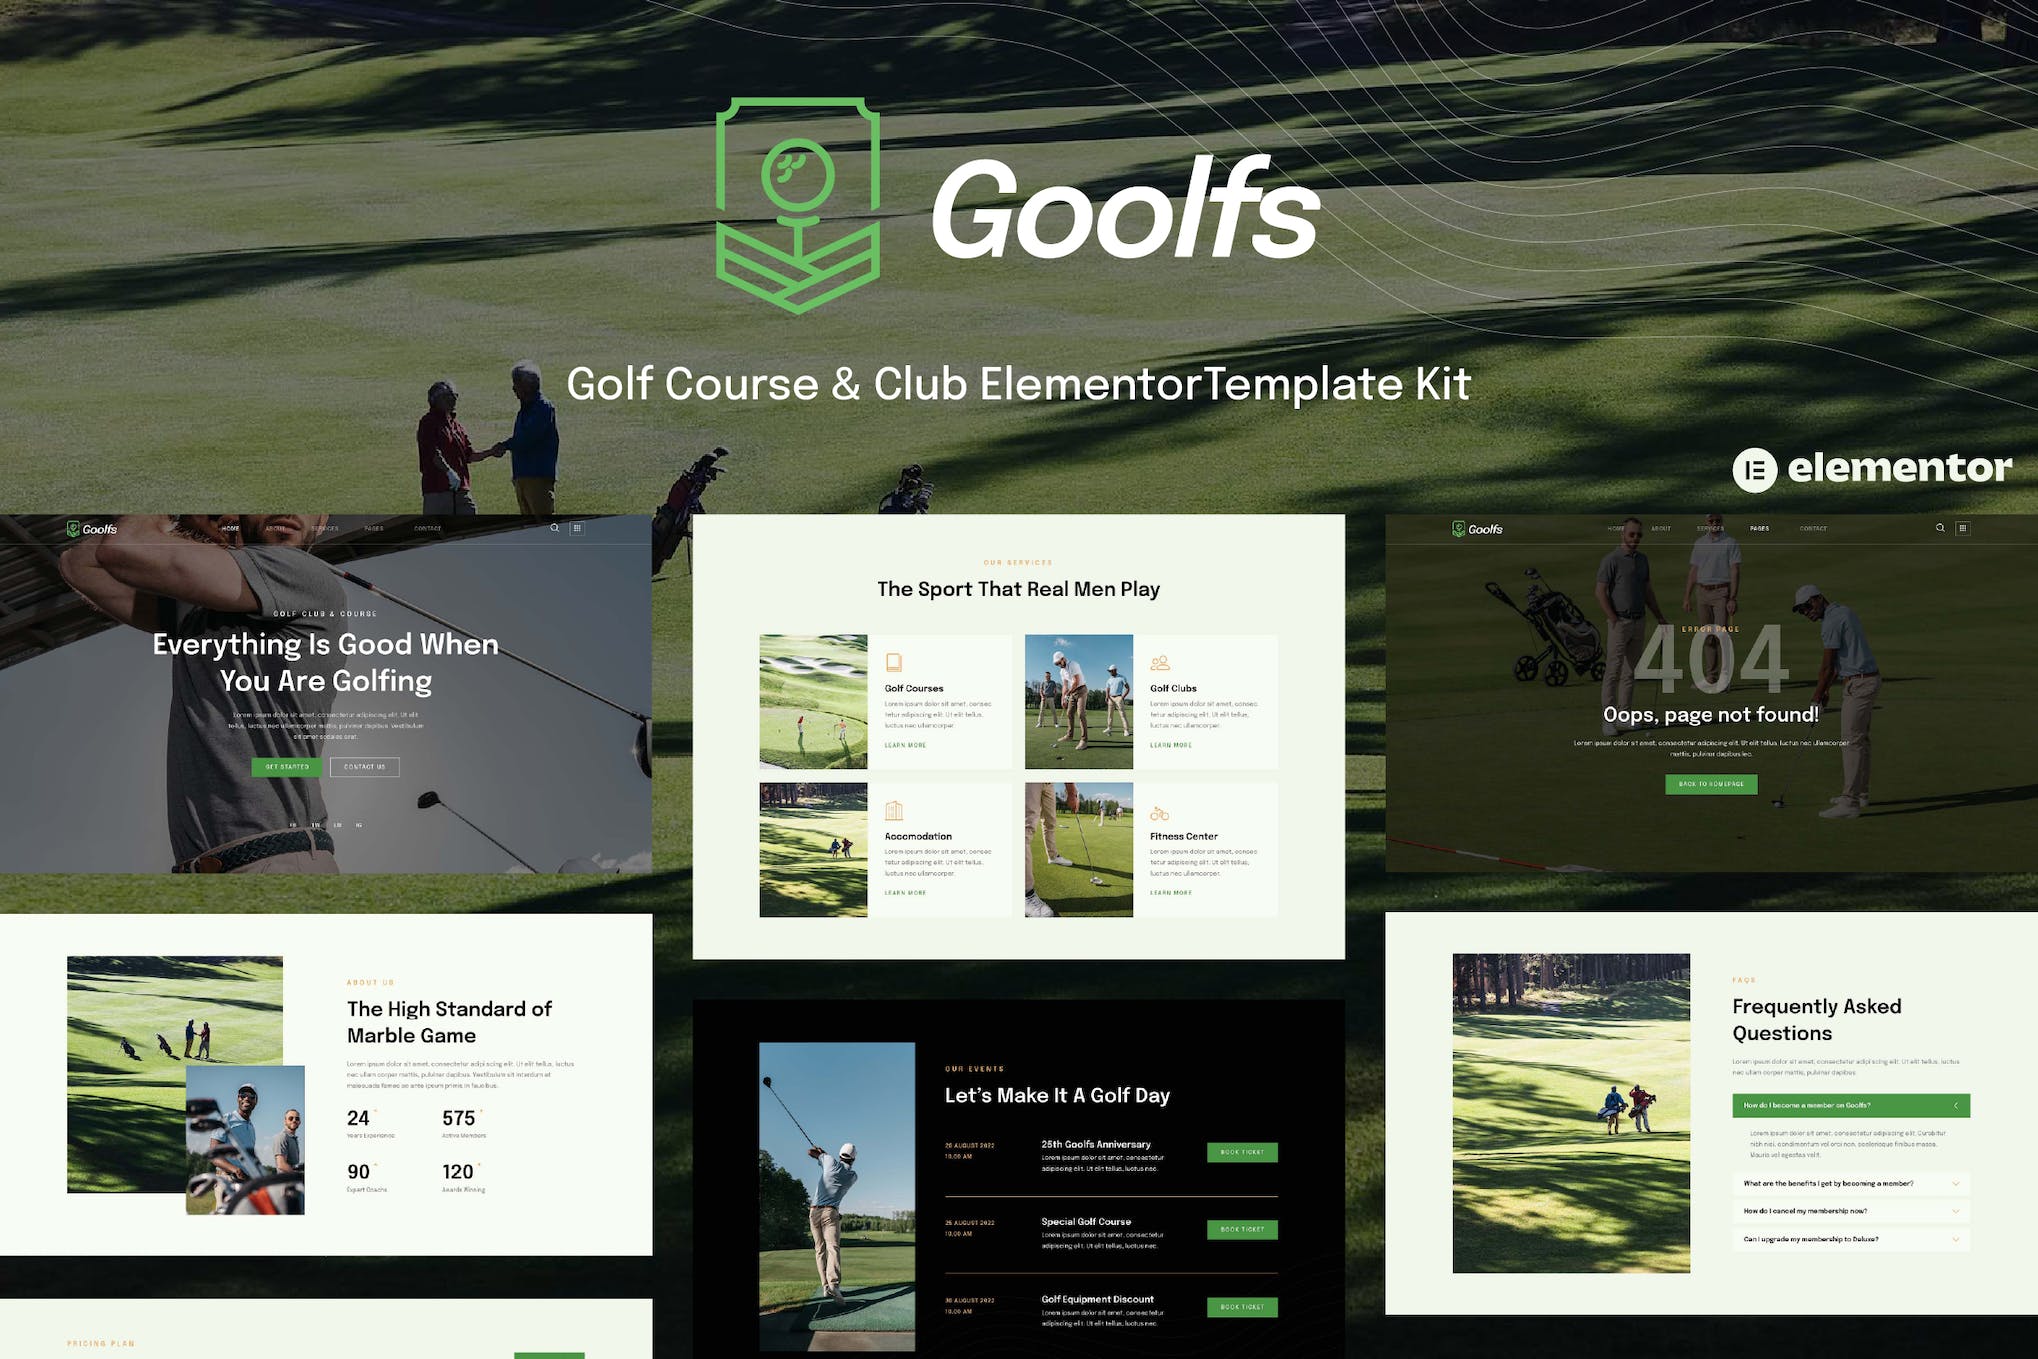 Goolfs - Golf Course & Club Elementor Template Kit